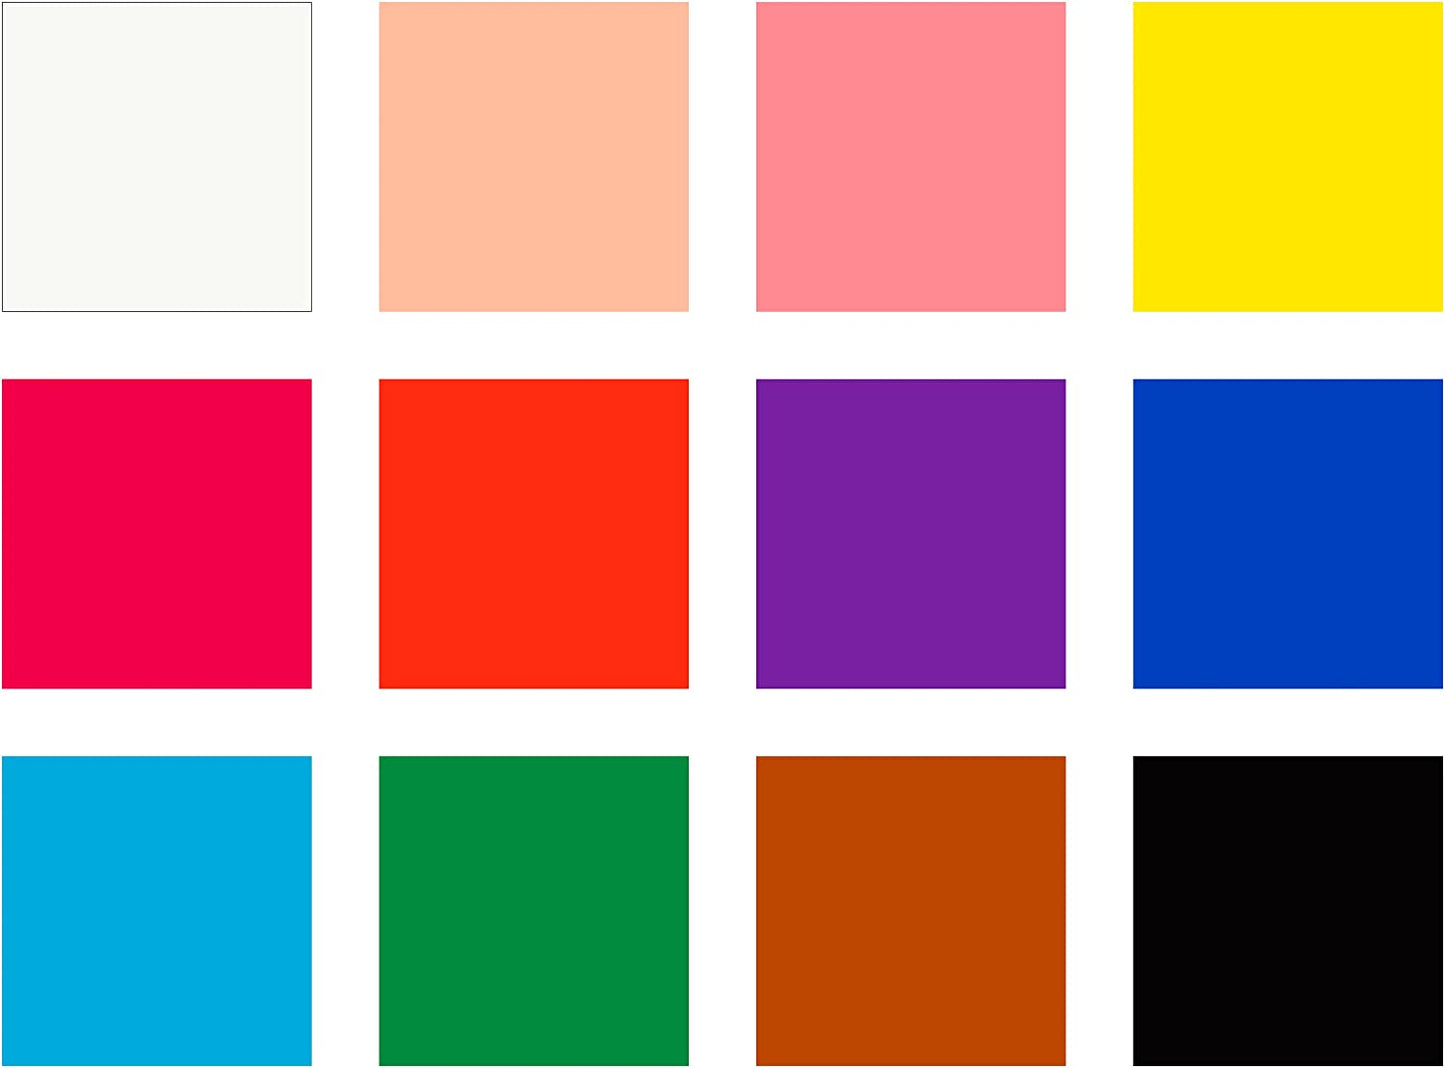 Staedtler Karat Premium Quality Soft Pastel Chalks Set of 12 colors (2430C12)